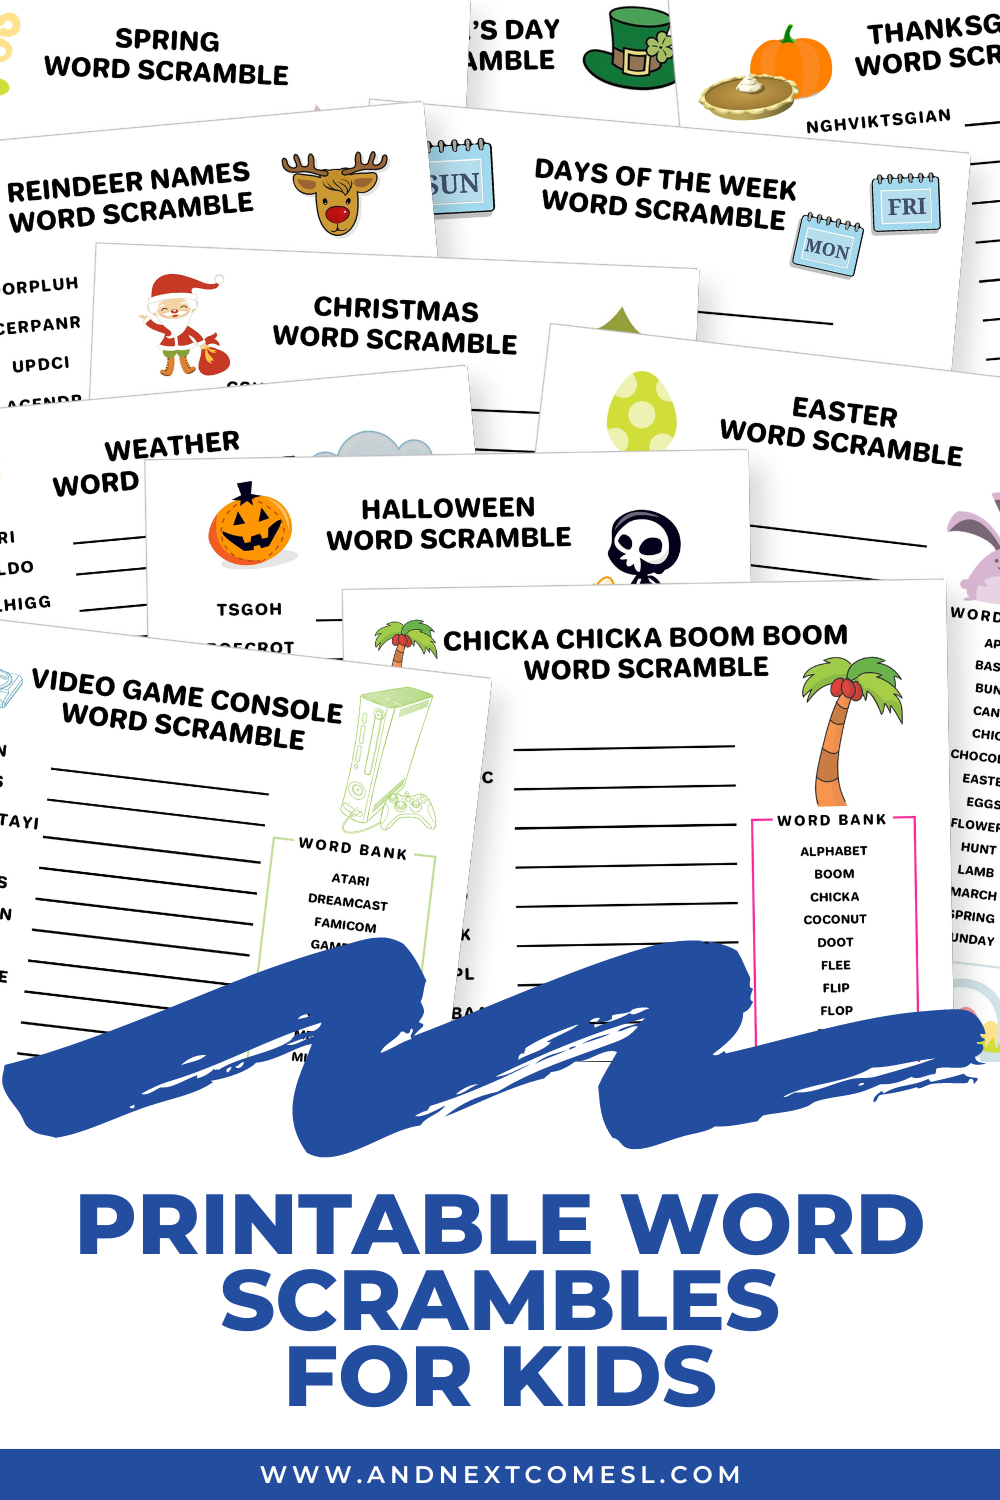 Lots of fun printable word scramble games for kids